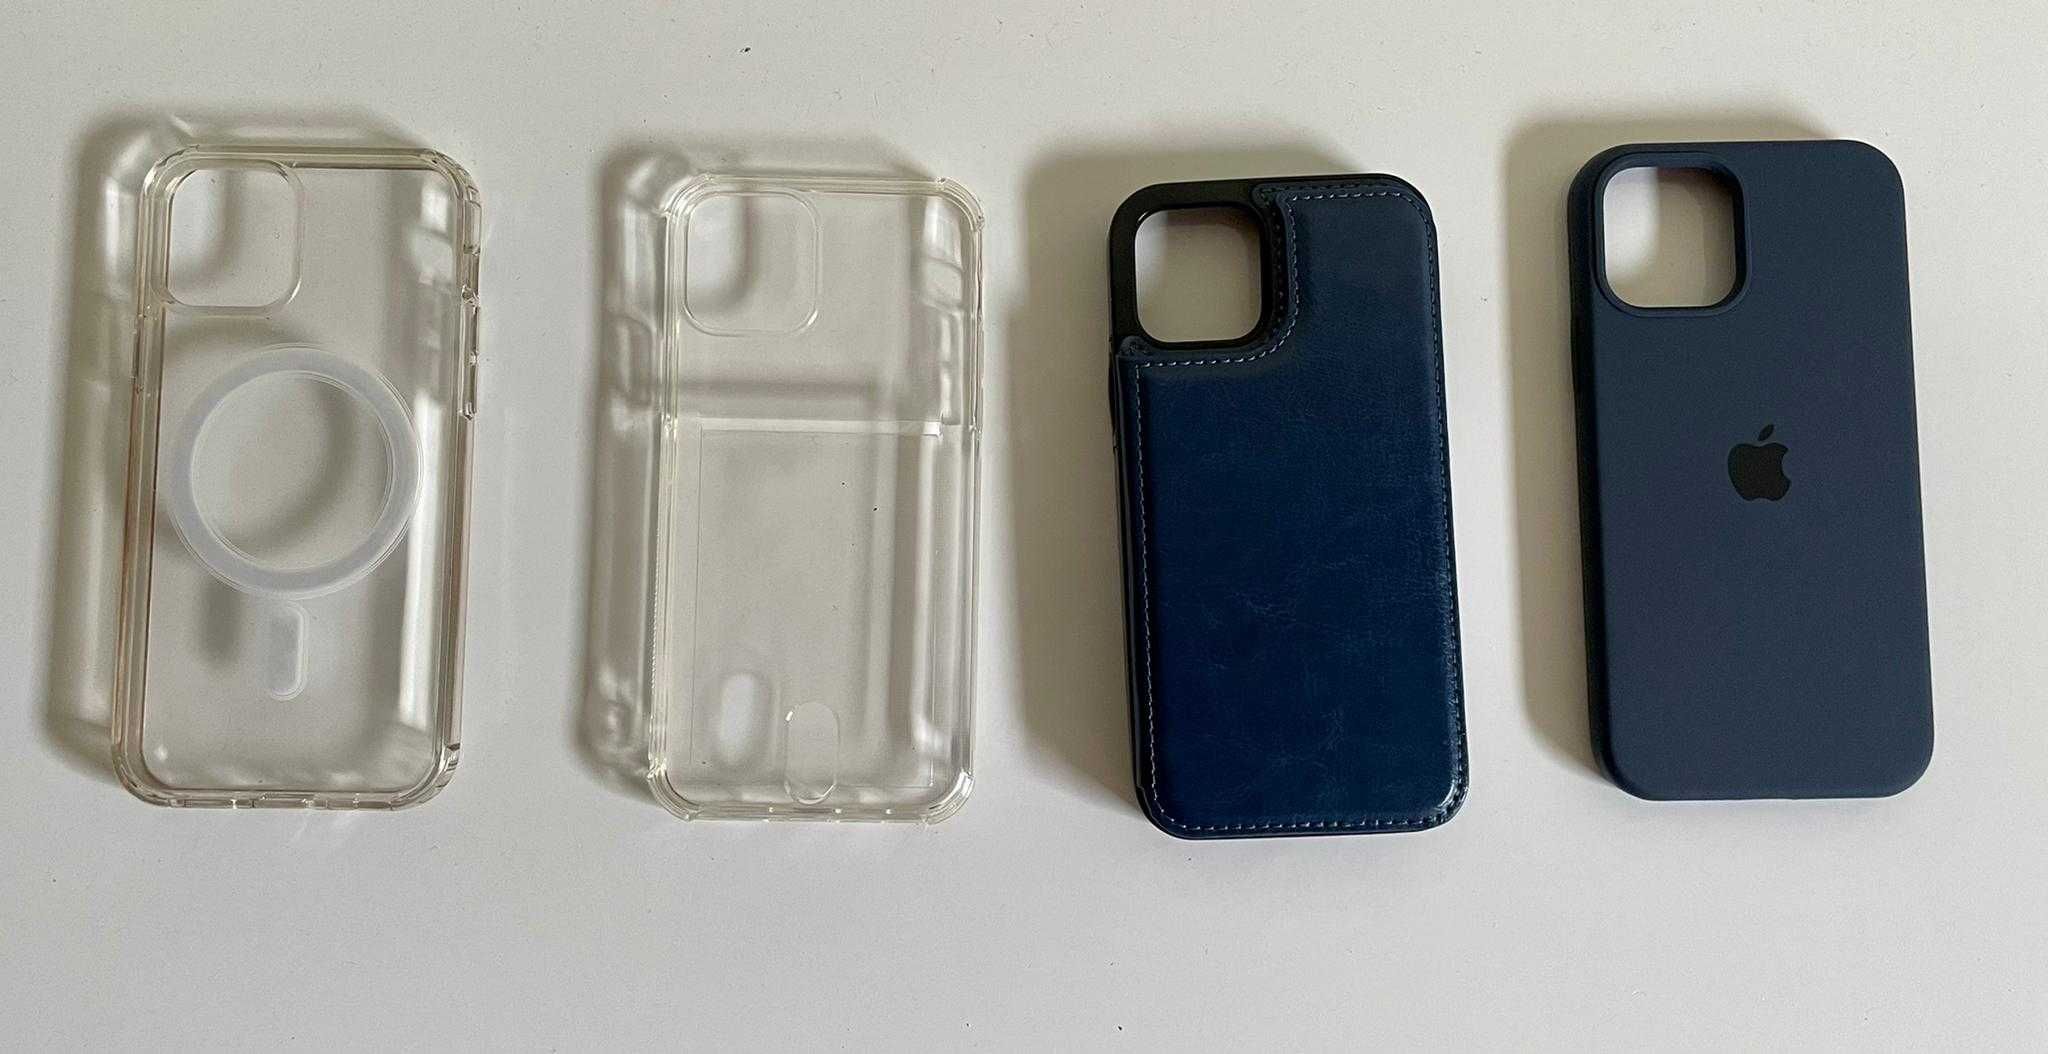 Acessorios capas de proteçao Iphone 12 e iPhone 12 Pro